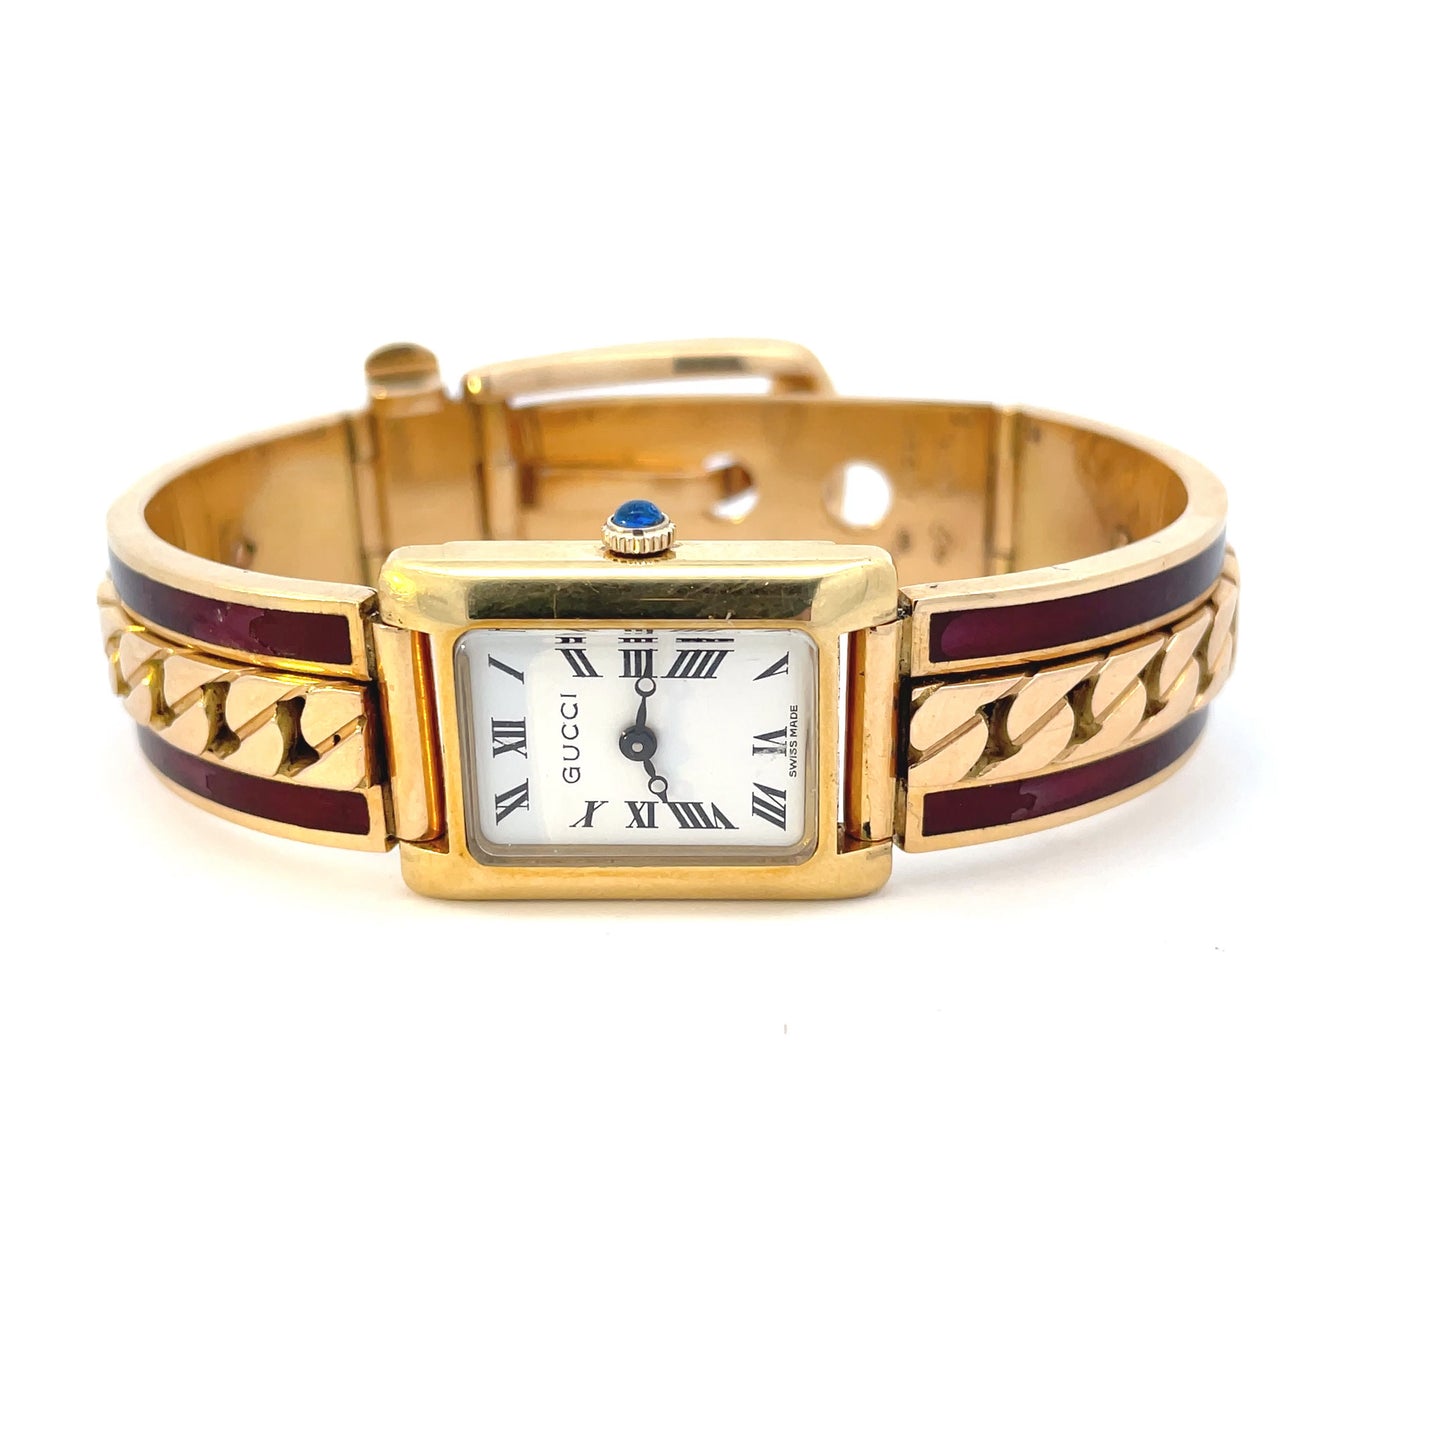 Gucci 1970s 18KT Yellow Gold & Enamel Bracelet Watch front side view